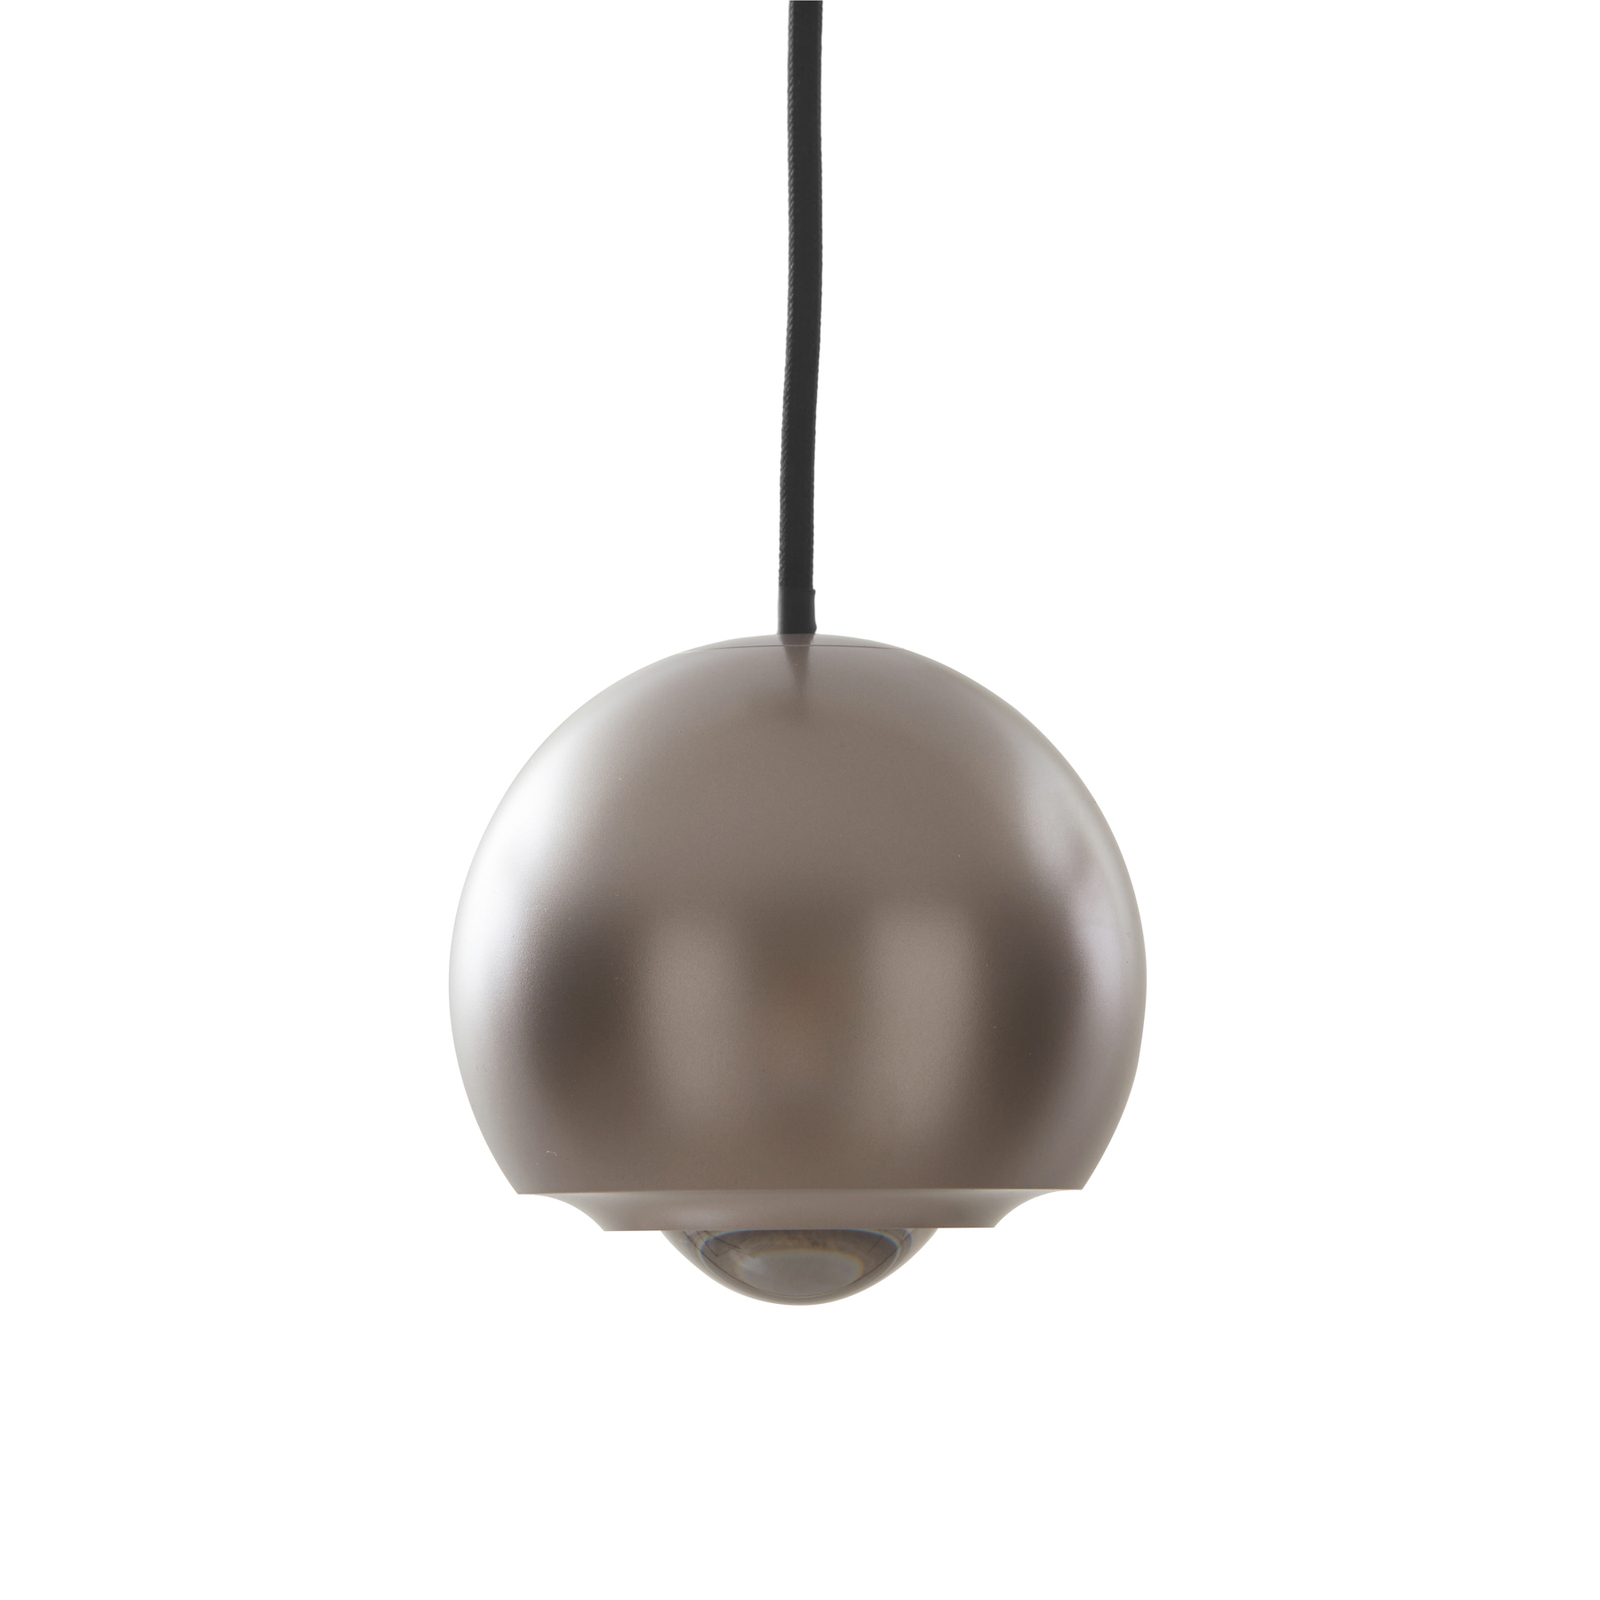 Lucande LED hanging light Varineth, nickel-coloured, aluminium, Ø 11 cm